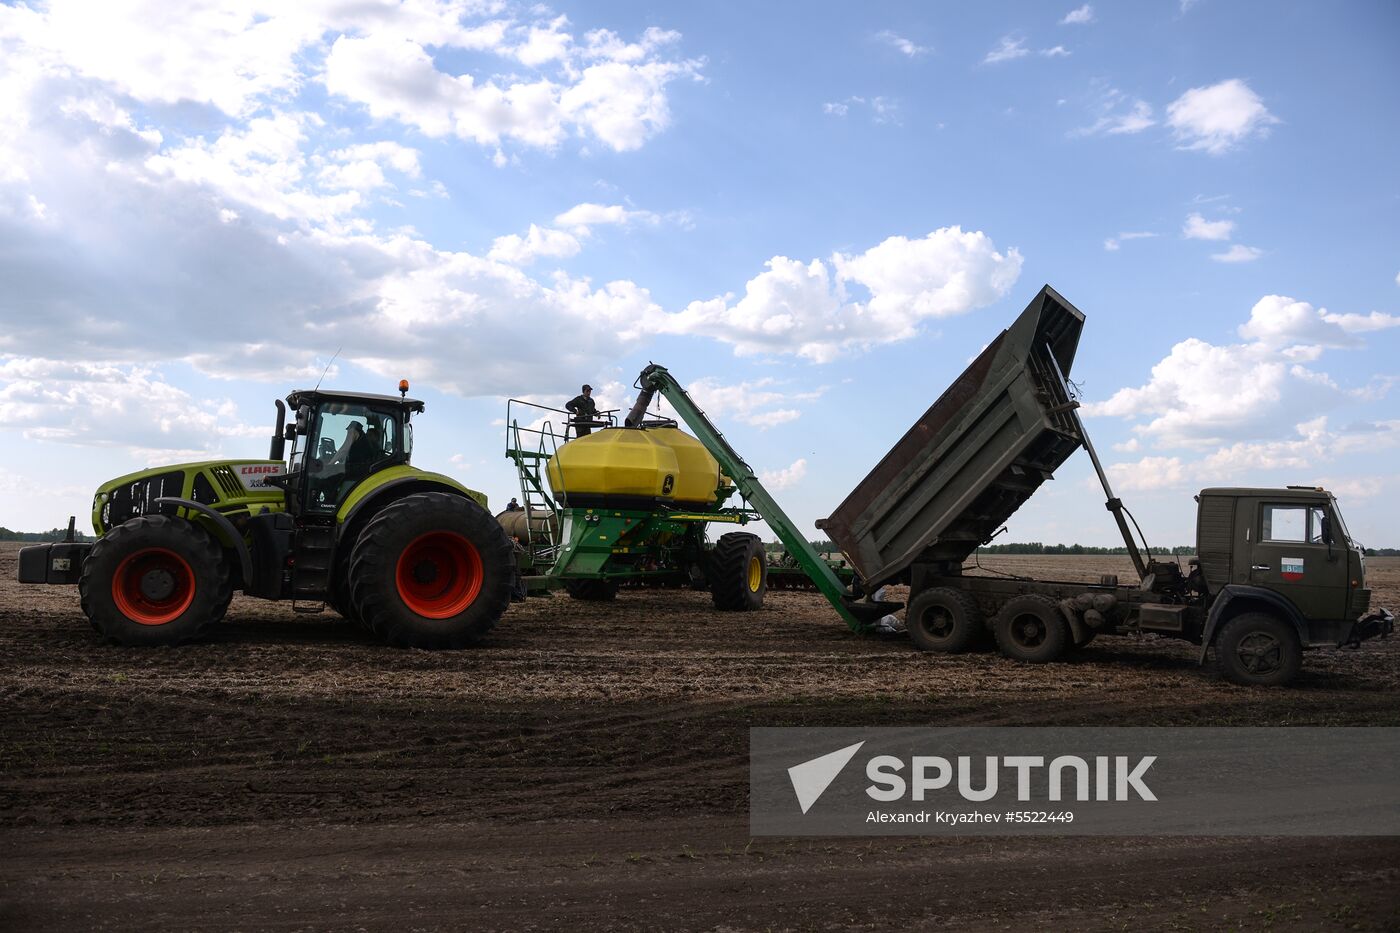 Spring sowing in Novosibirsk Region